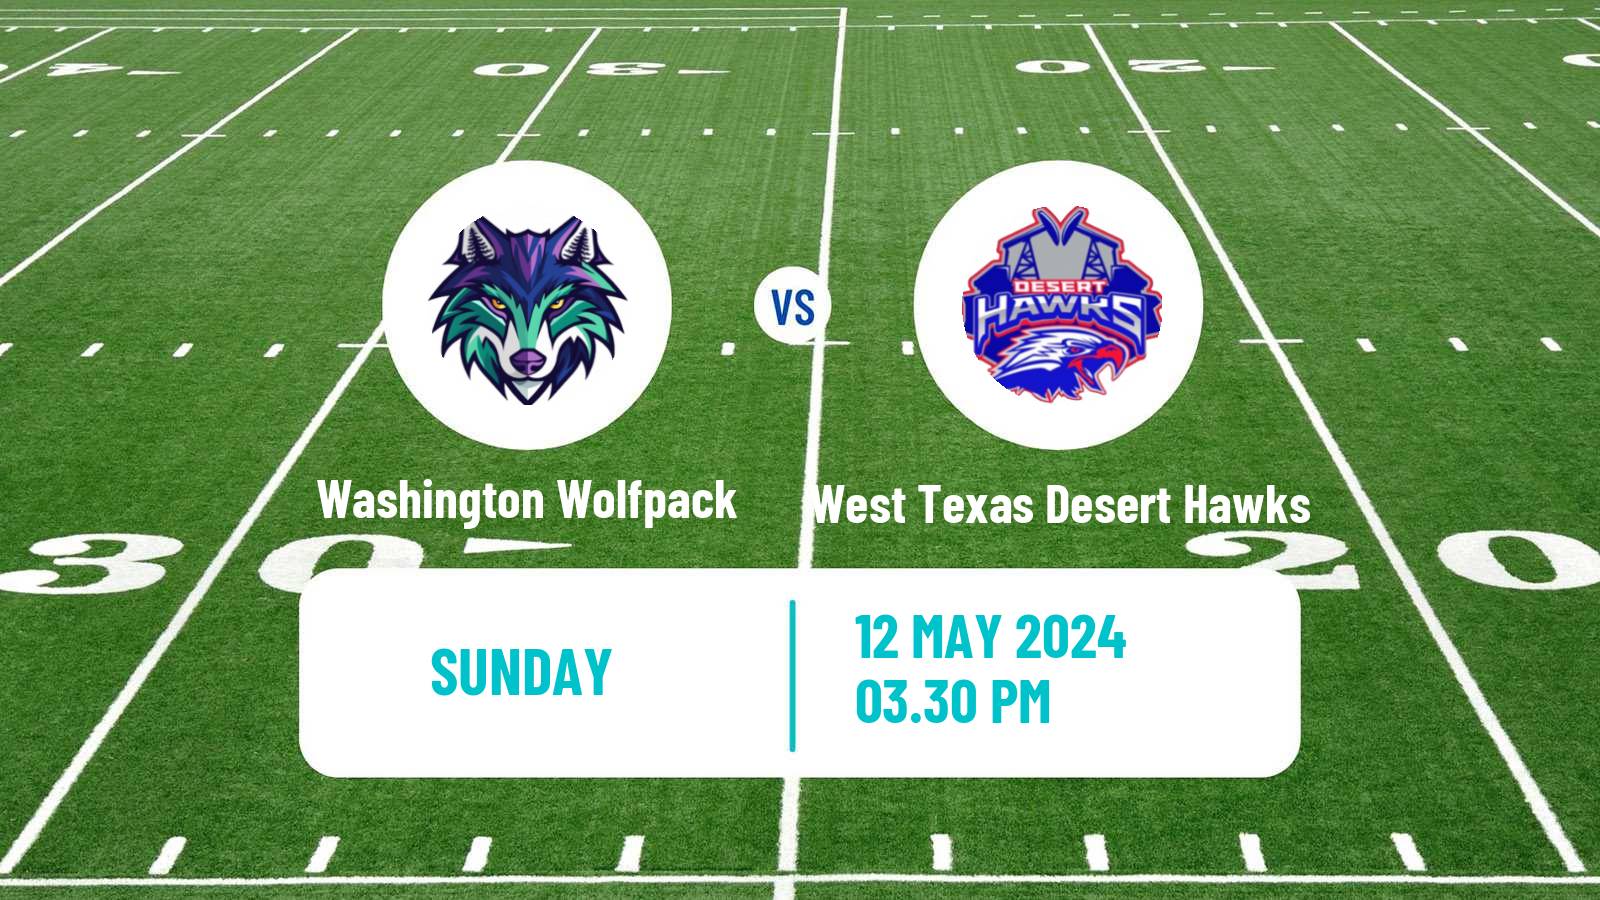 Arena football Arena Football League Washington Wolfpack - West Texas Desert Hawks